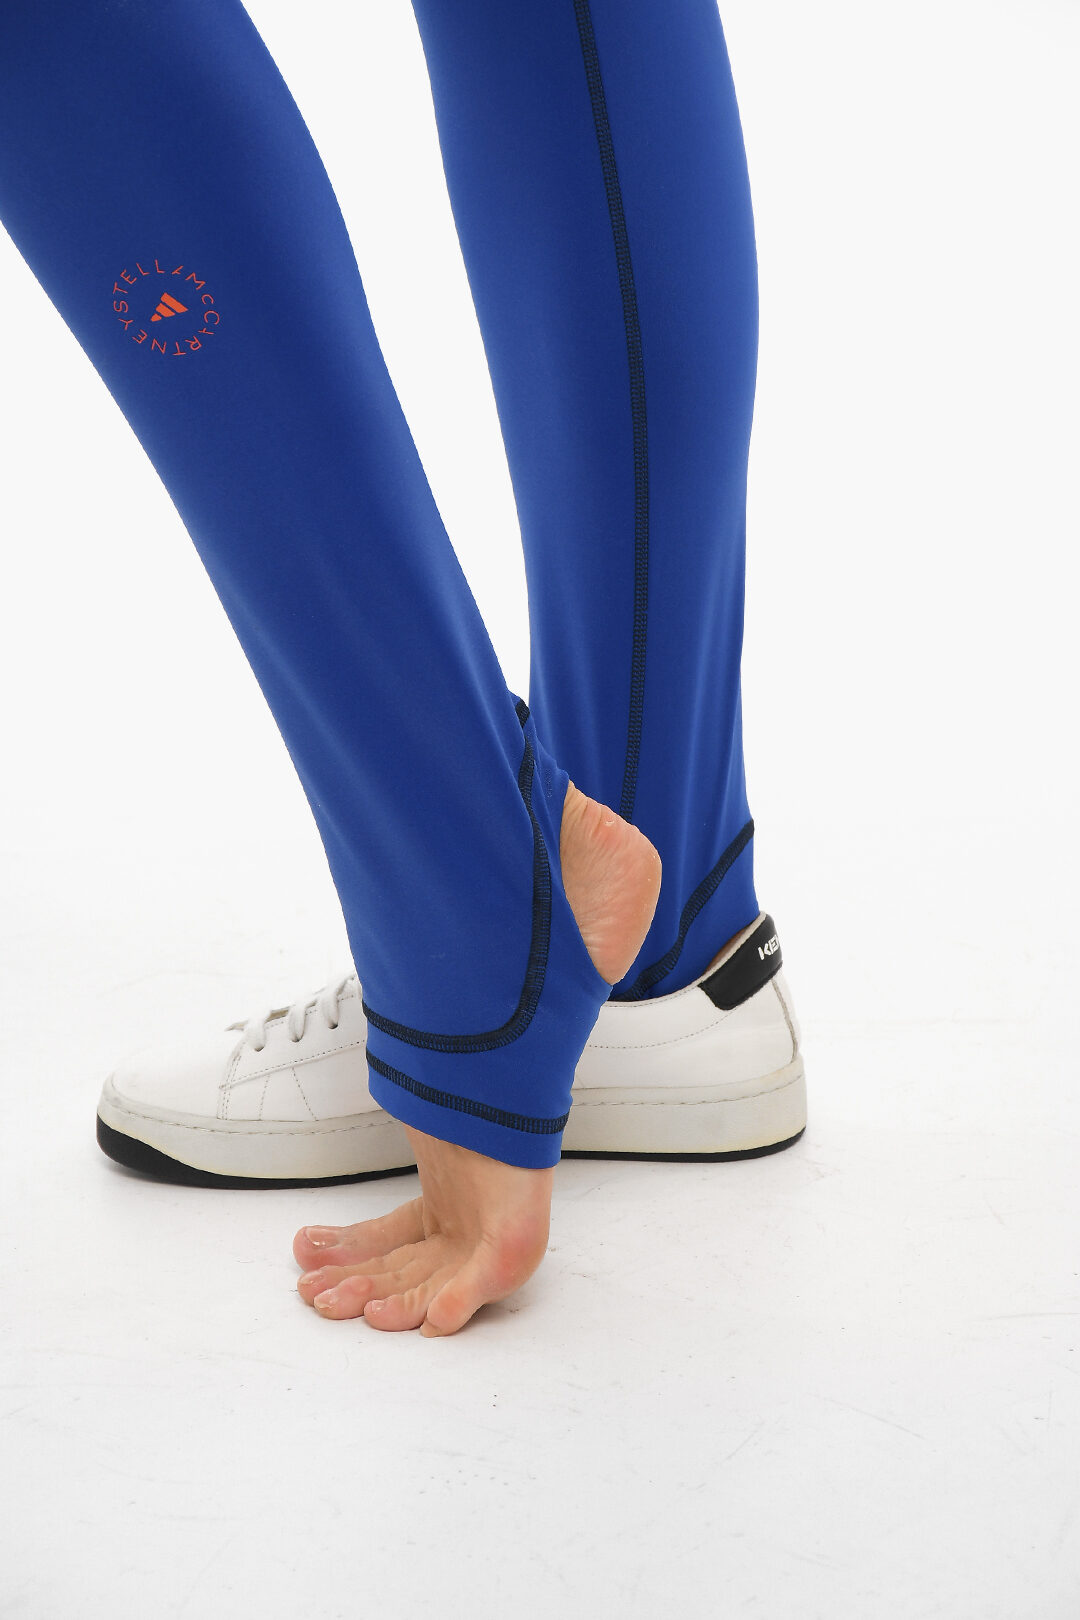 ADIDAS BY STELLA MCCARTNEY Perforated stretch leggings